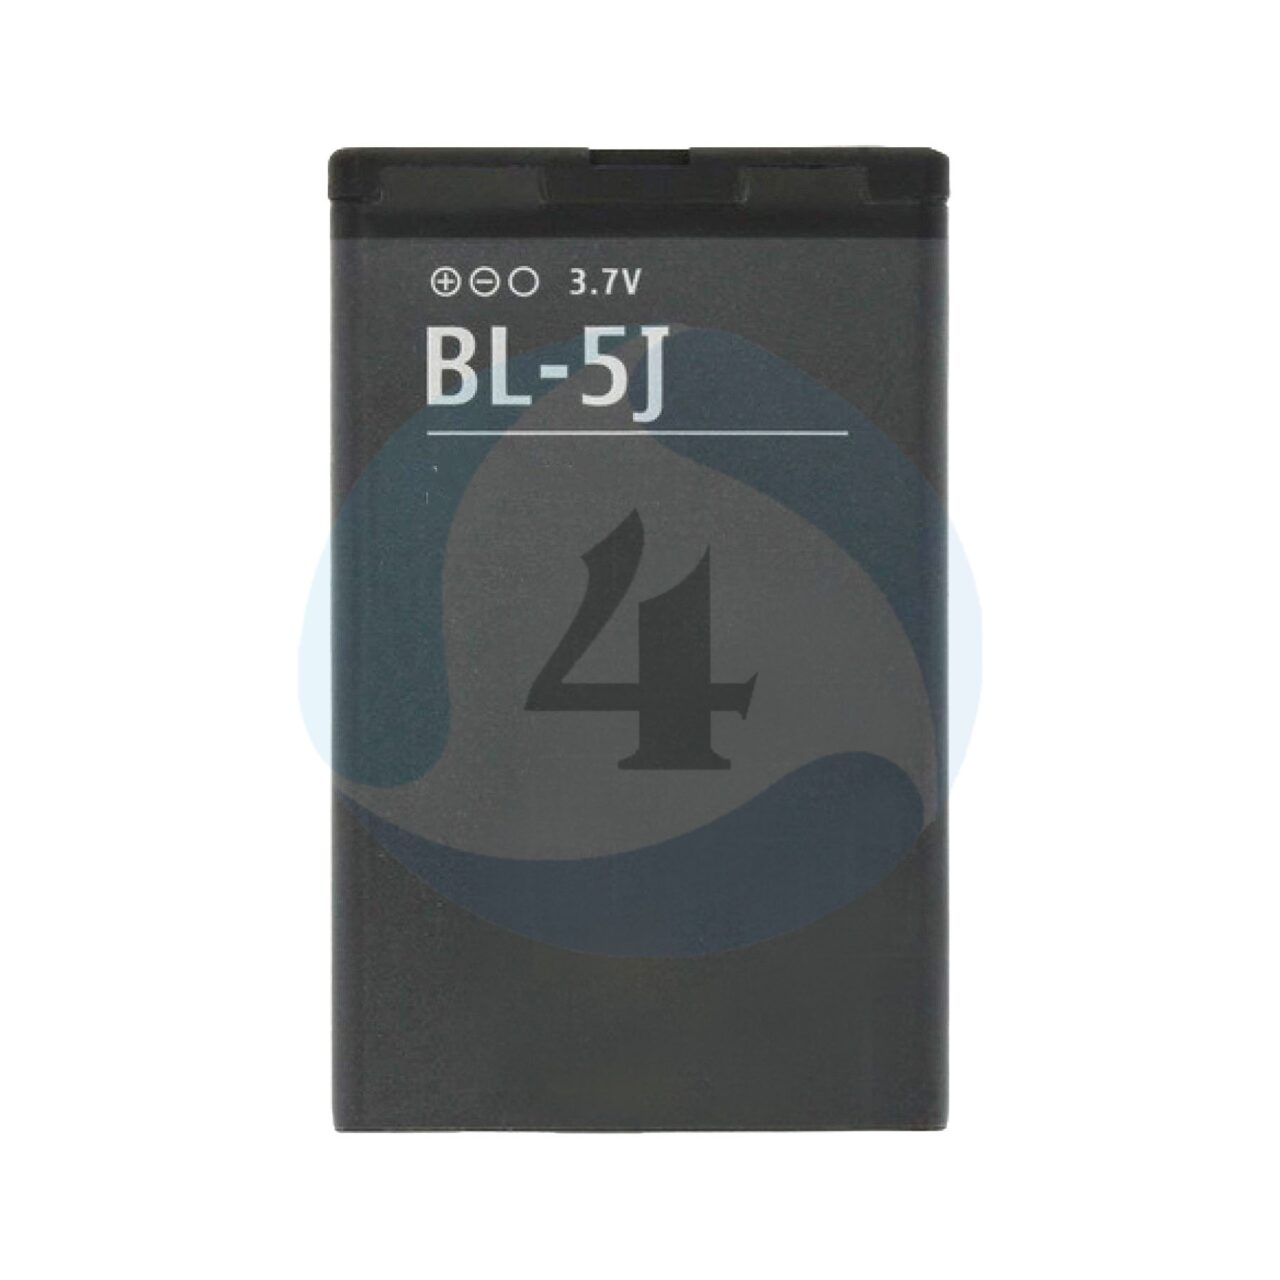 Battery BL 5 J for Nokia